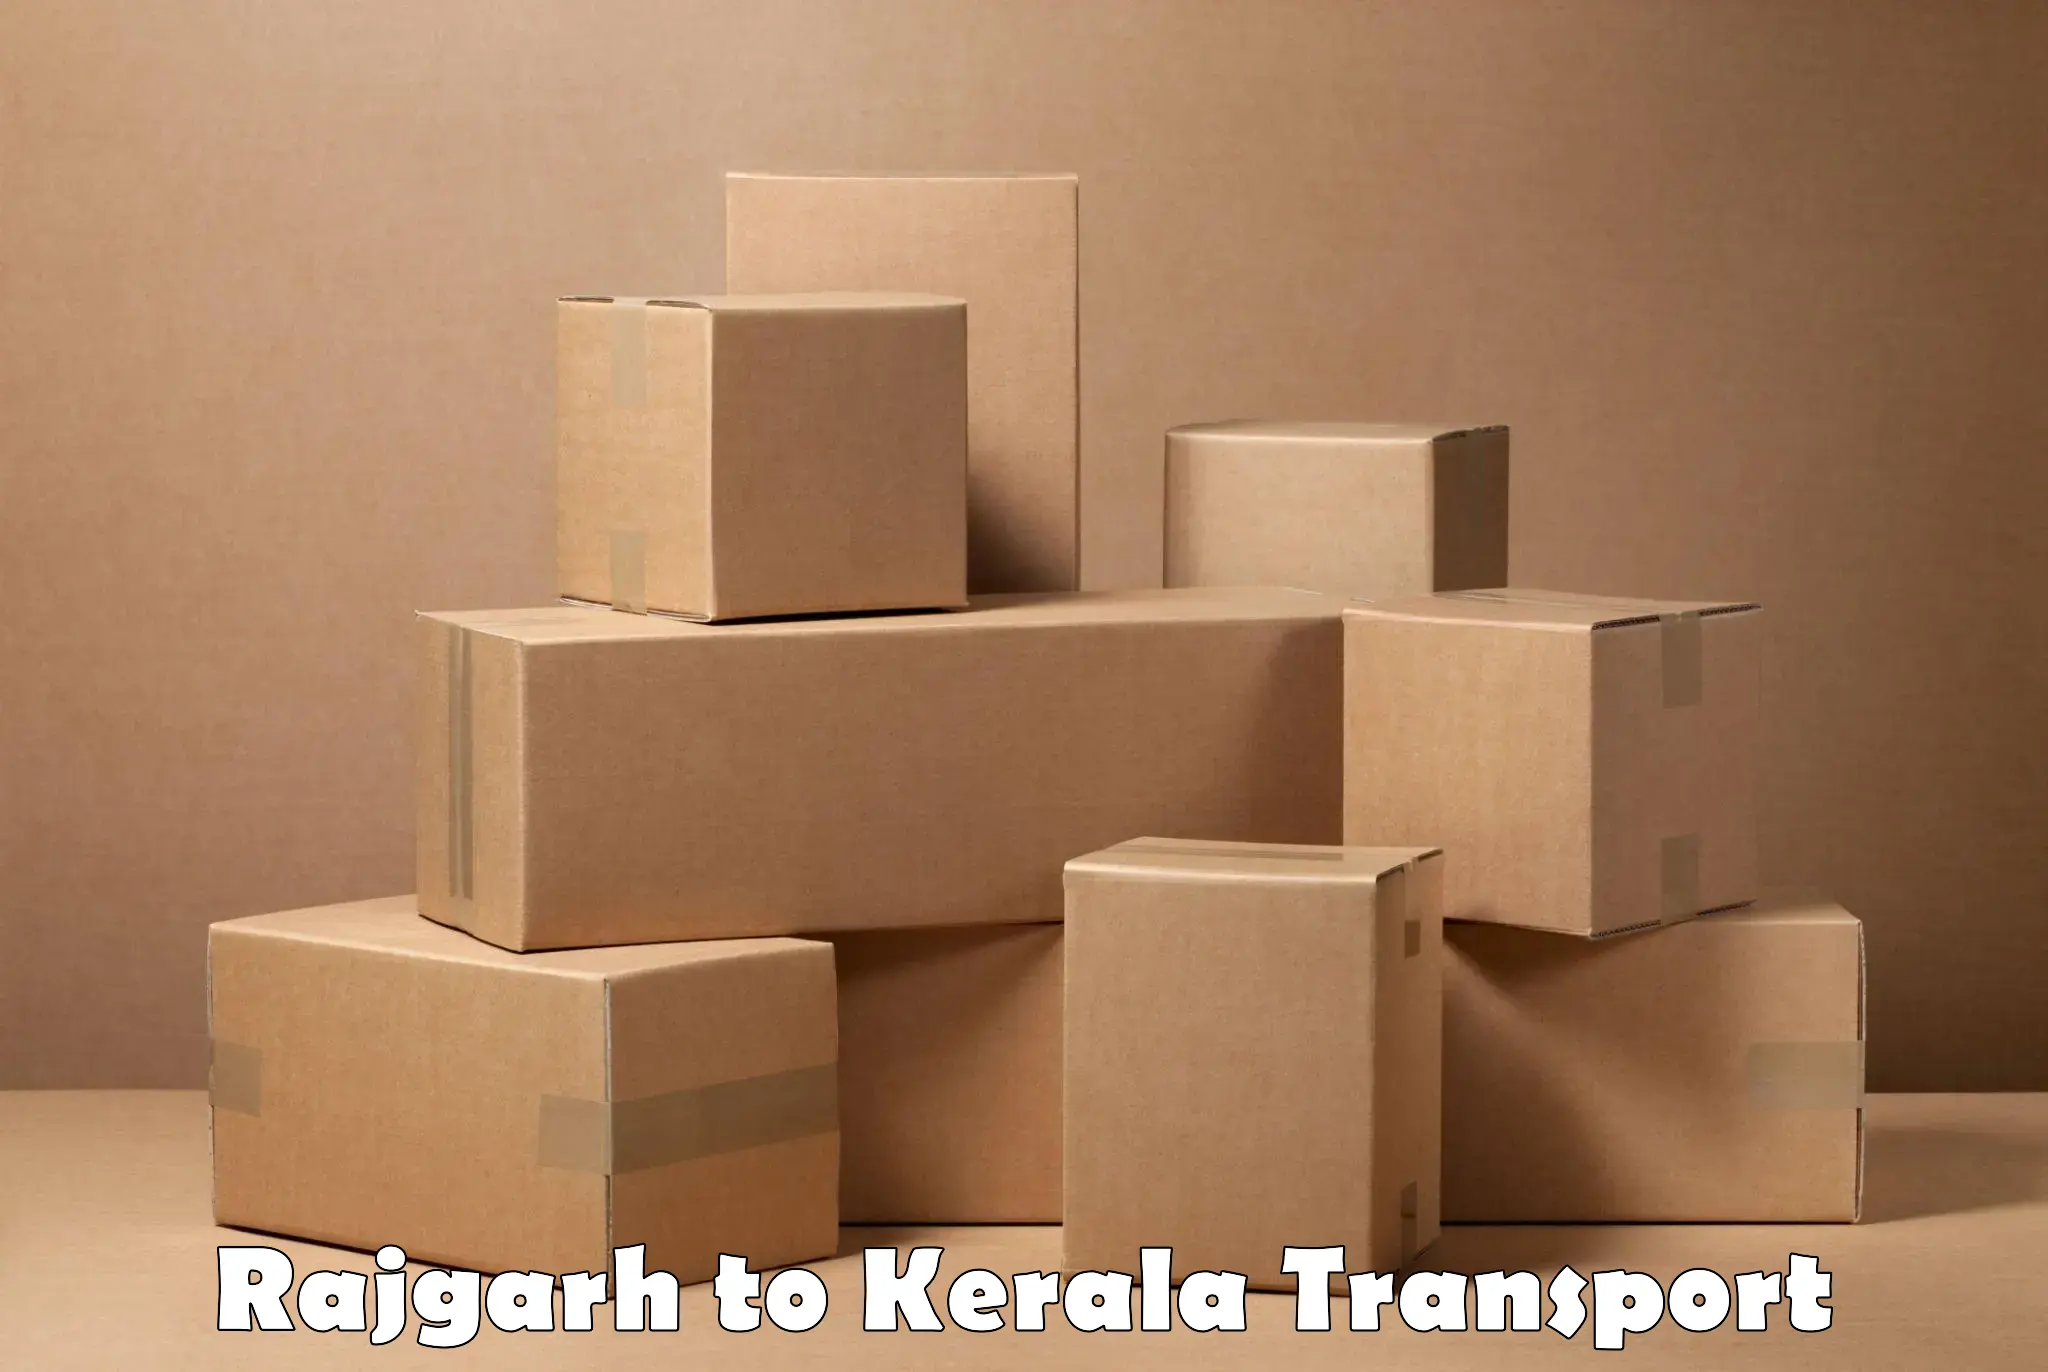 Truck transport companies in India Rajgarh to Trivandrum